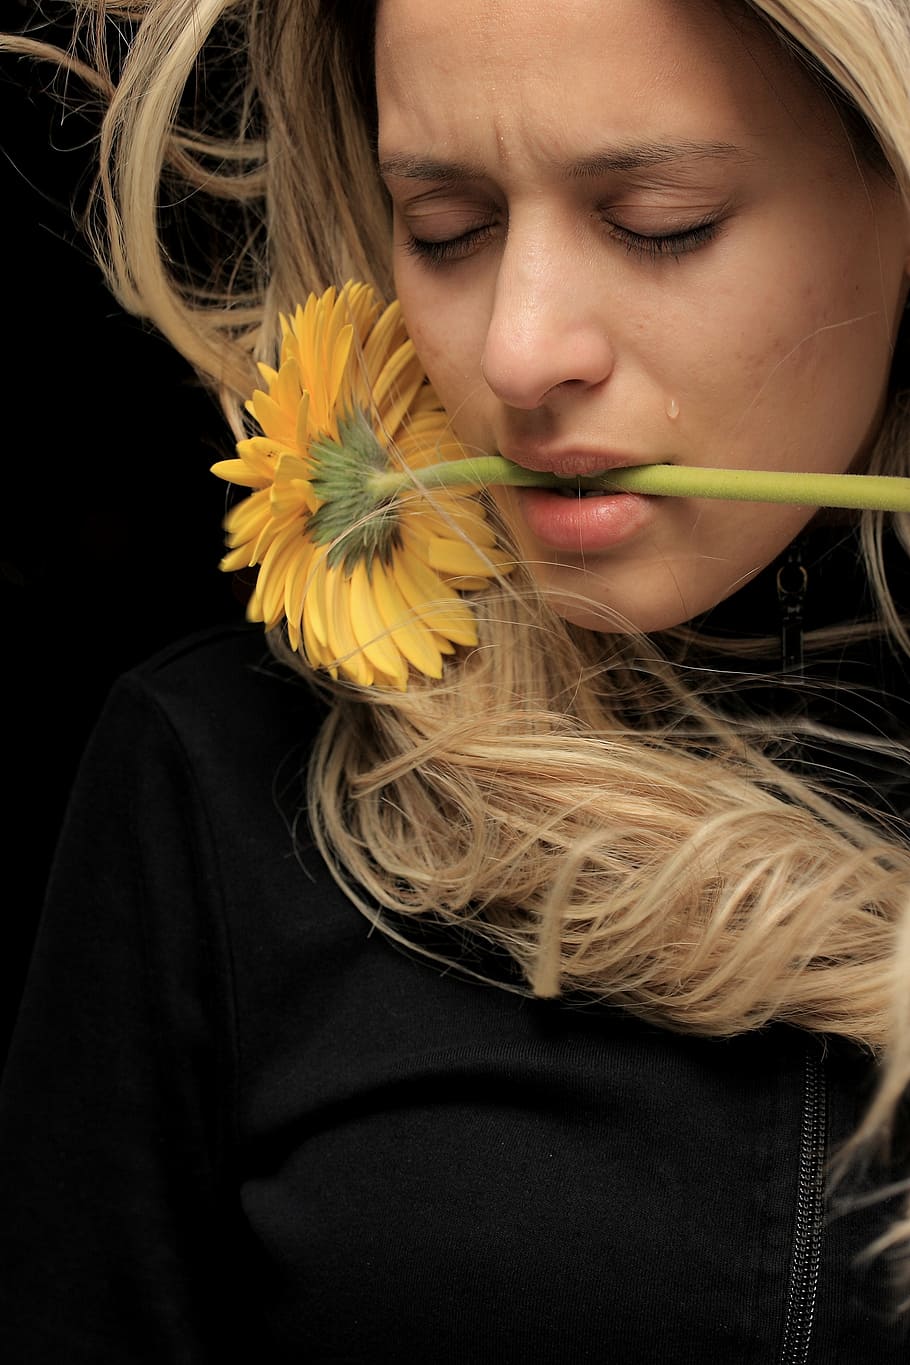 woman wearing black zip-up top biting yellow sunflower, model